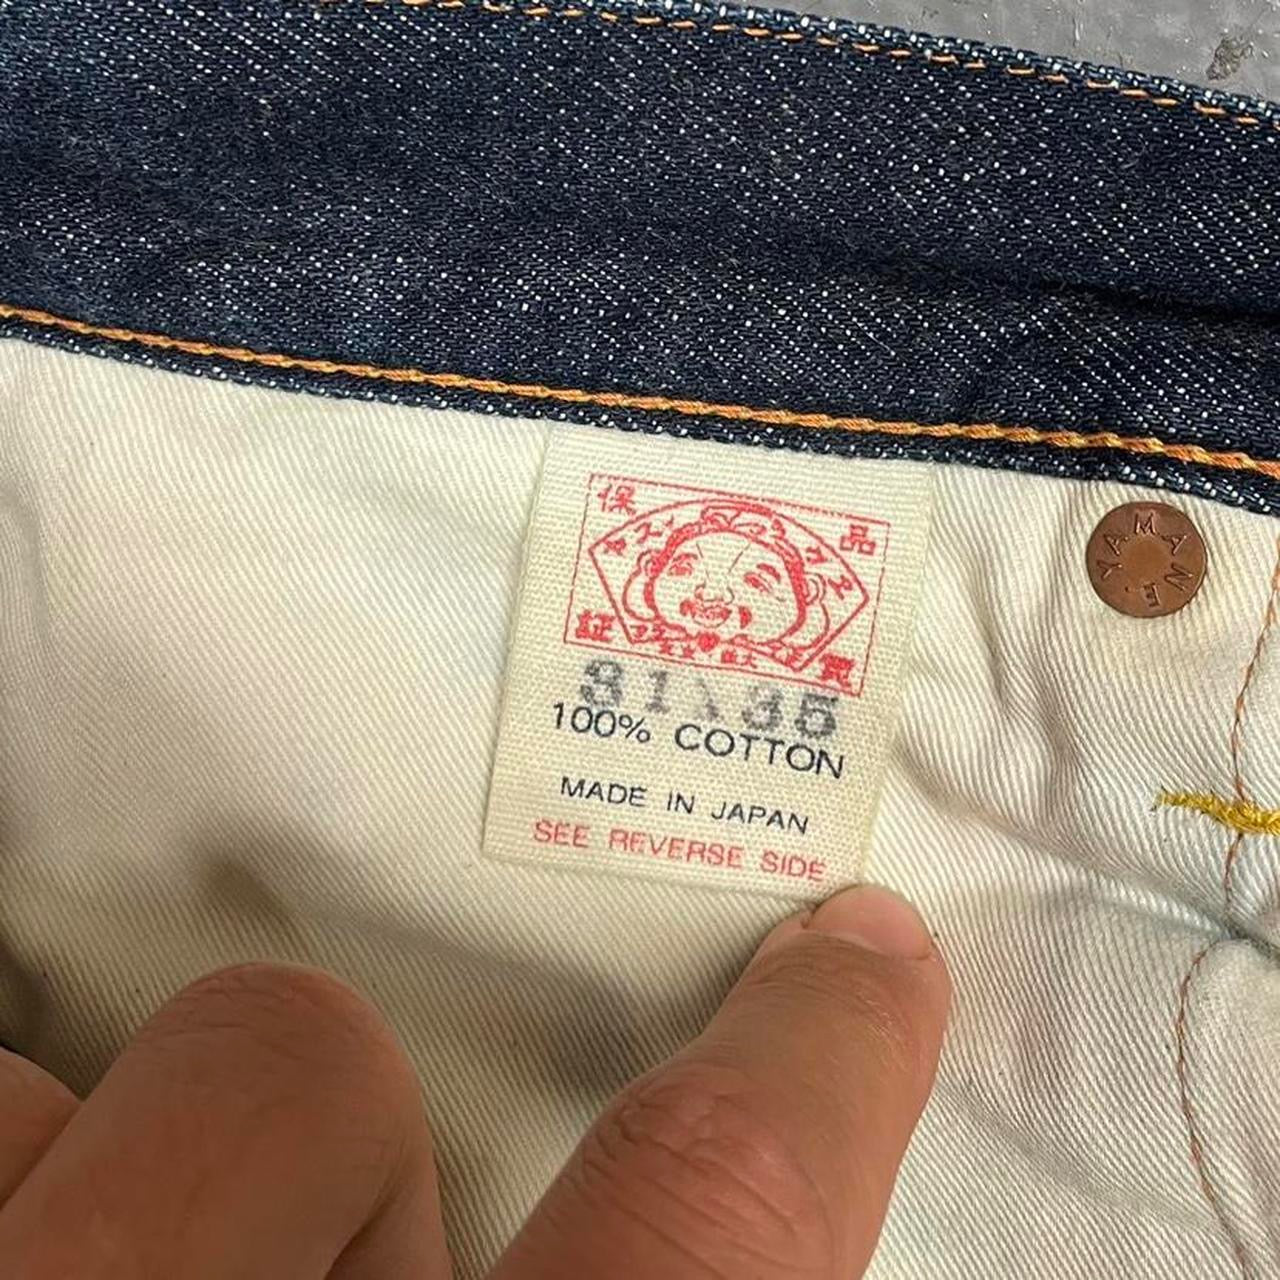 Evisu Selvedge Jeans With Yellow Daicock ( W31 )